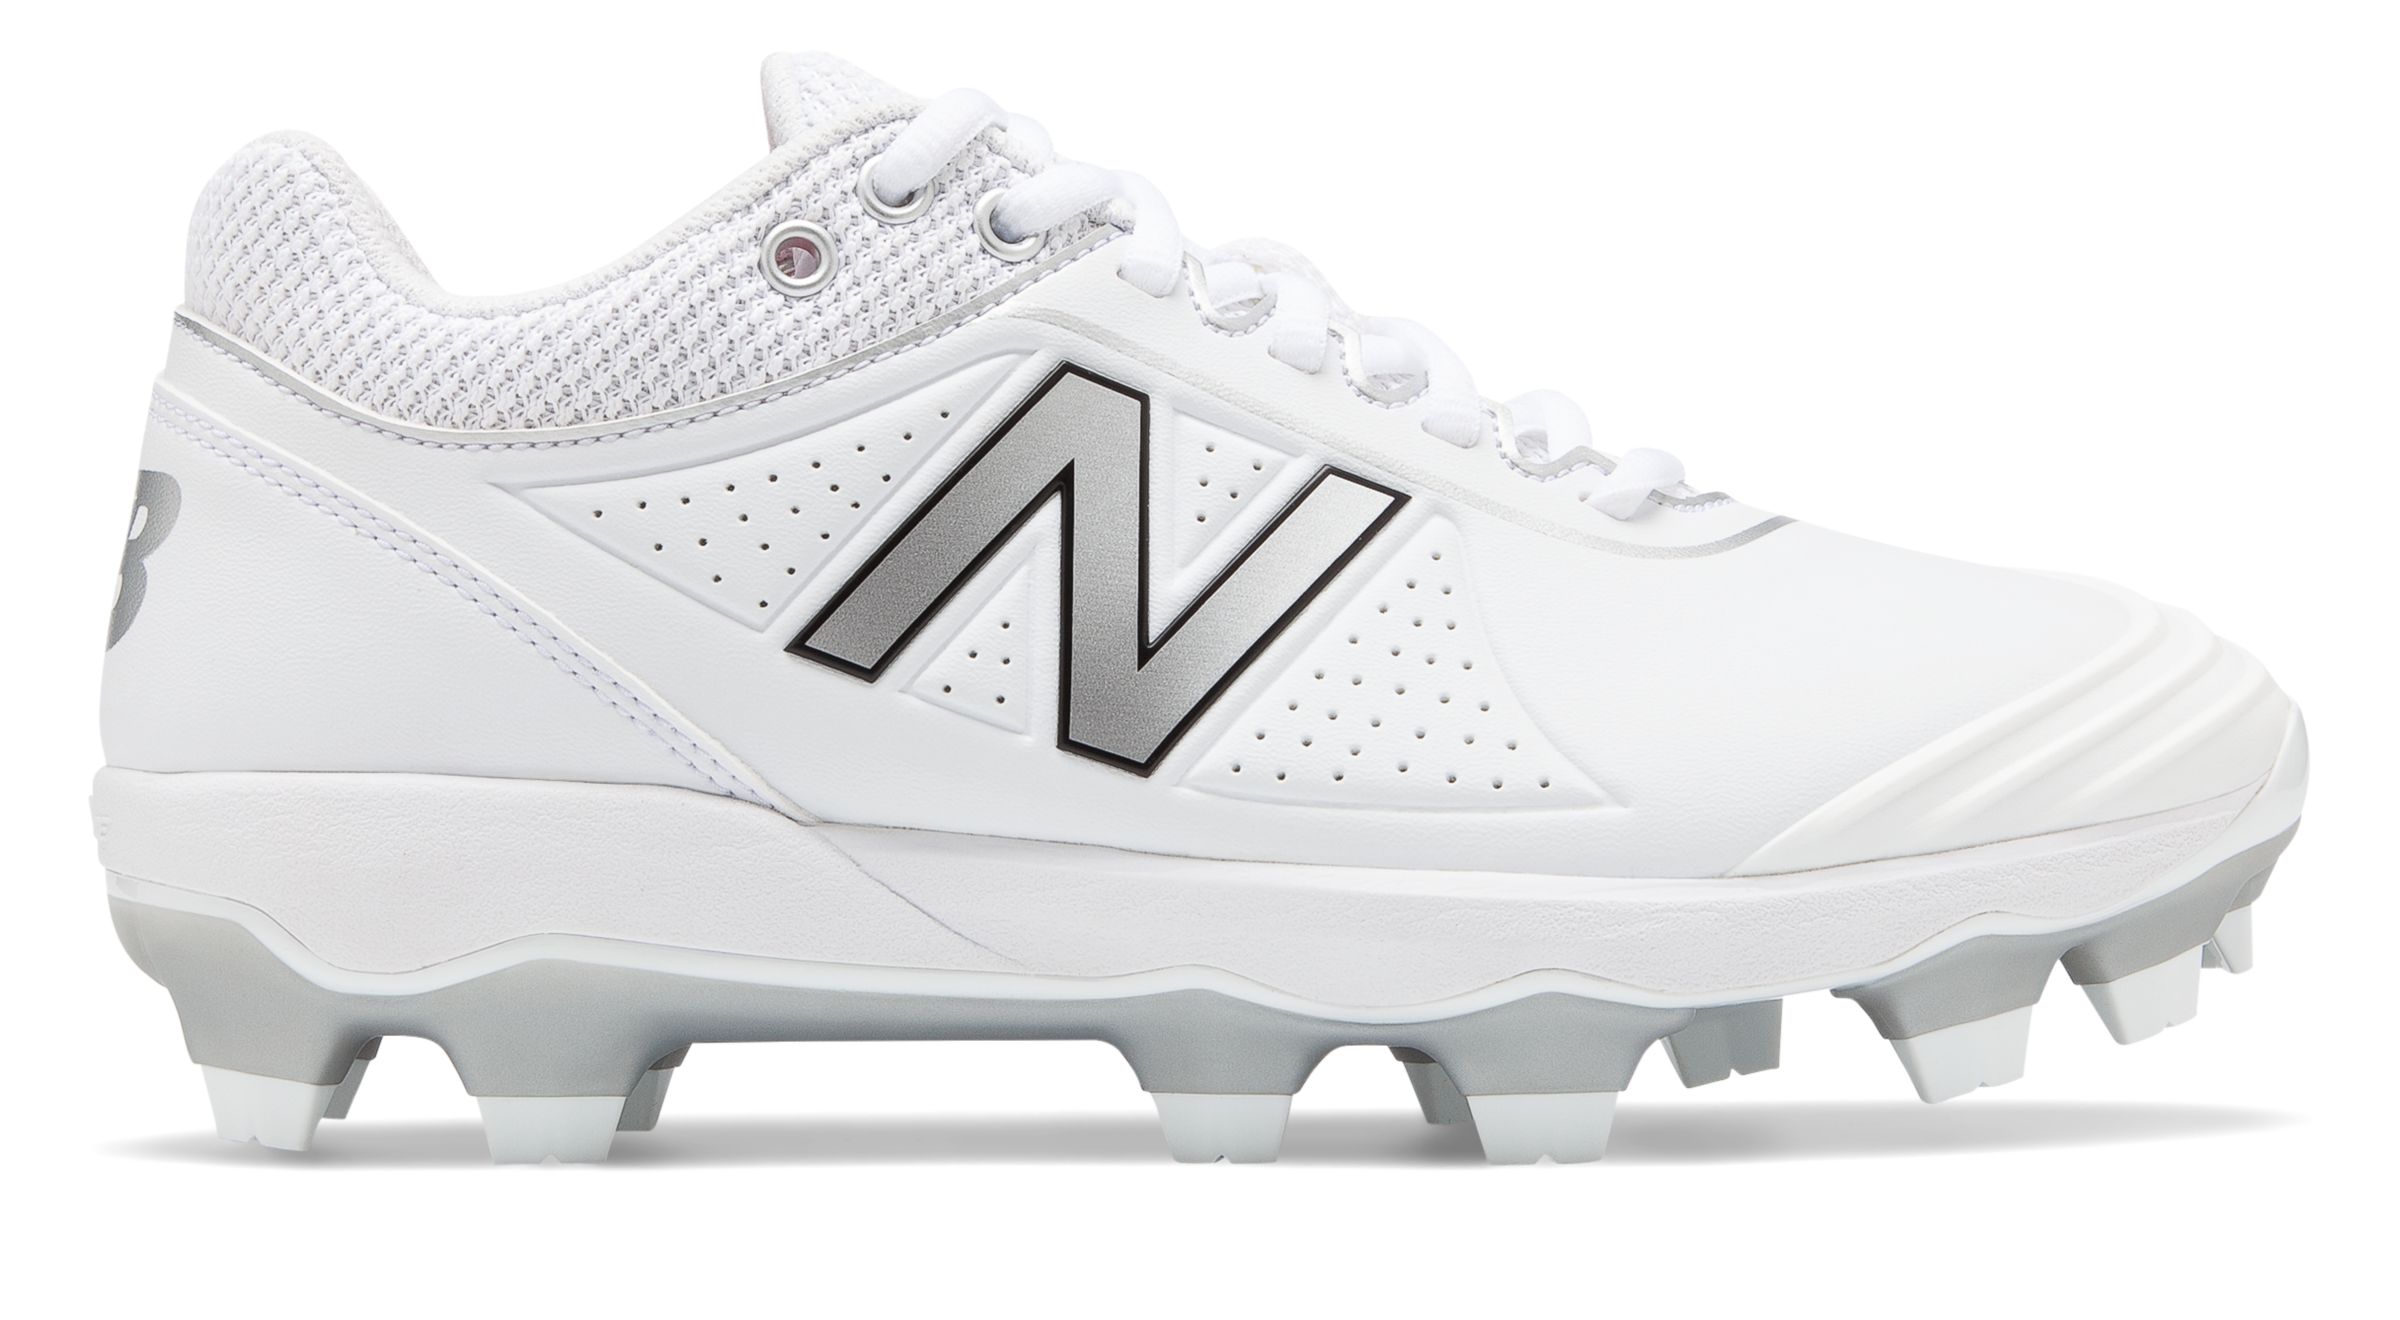 all white new balance softball cleats